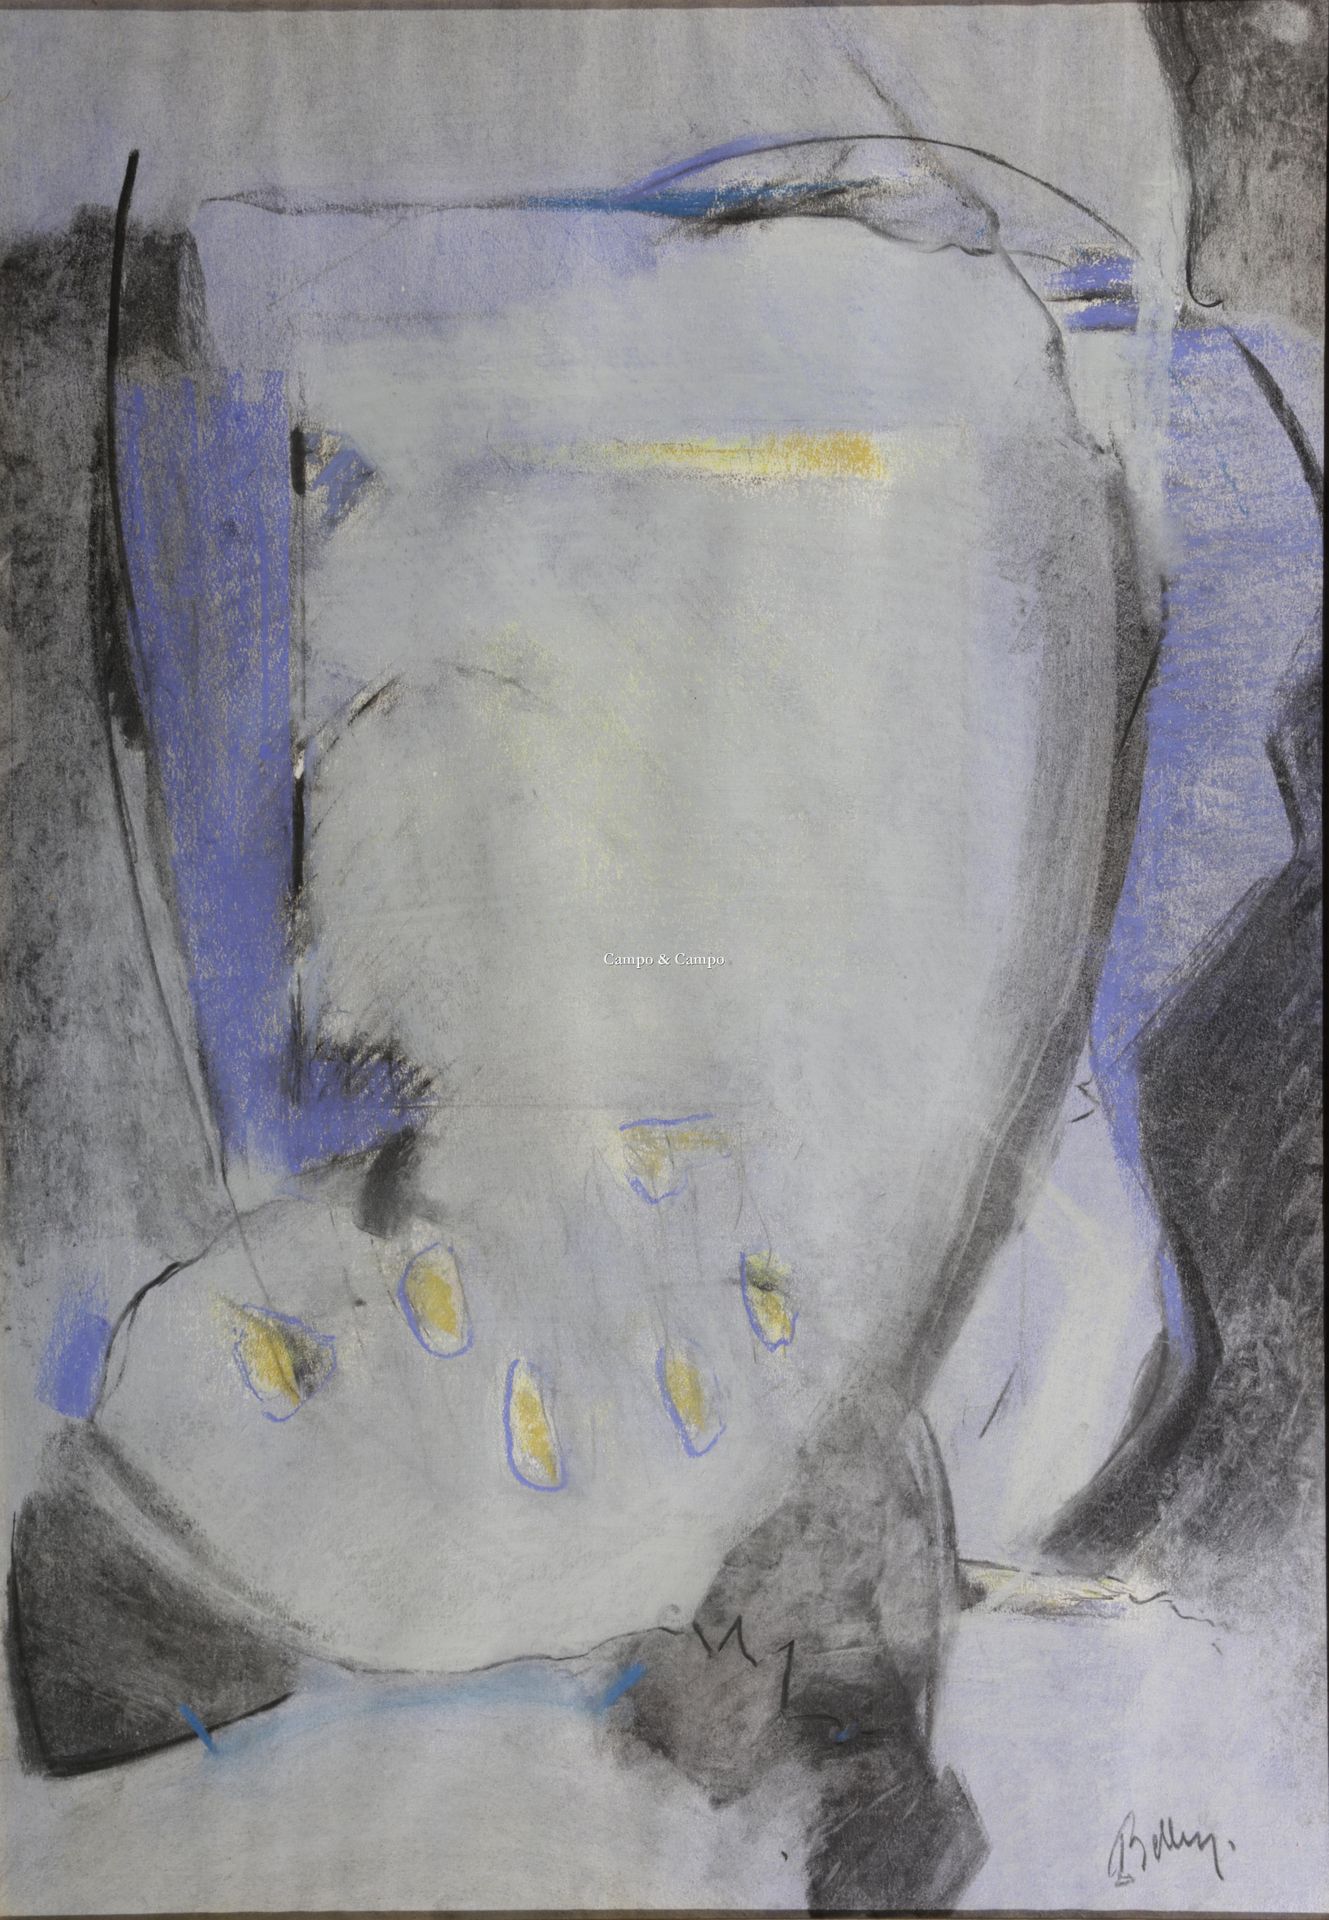 Bellens sus 1946-2020 蓝色的抽象构成
蓝色的抽象作品 
创作技术。混合媒体/纸
获取。100 x 70 cm